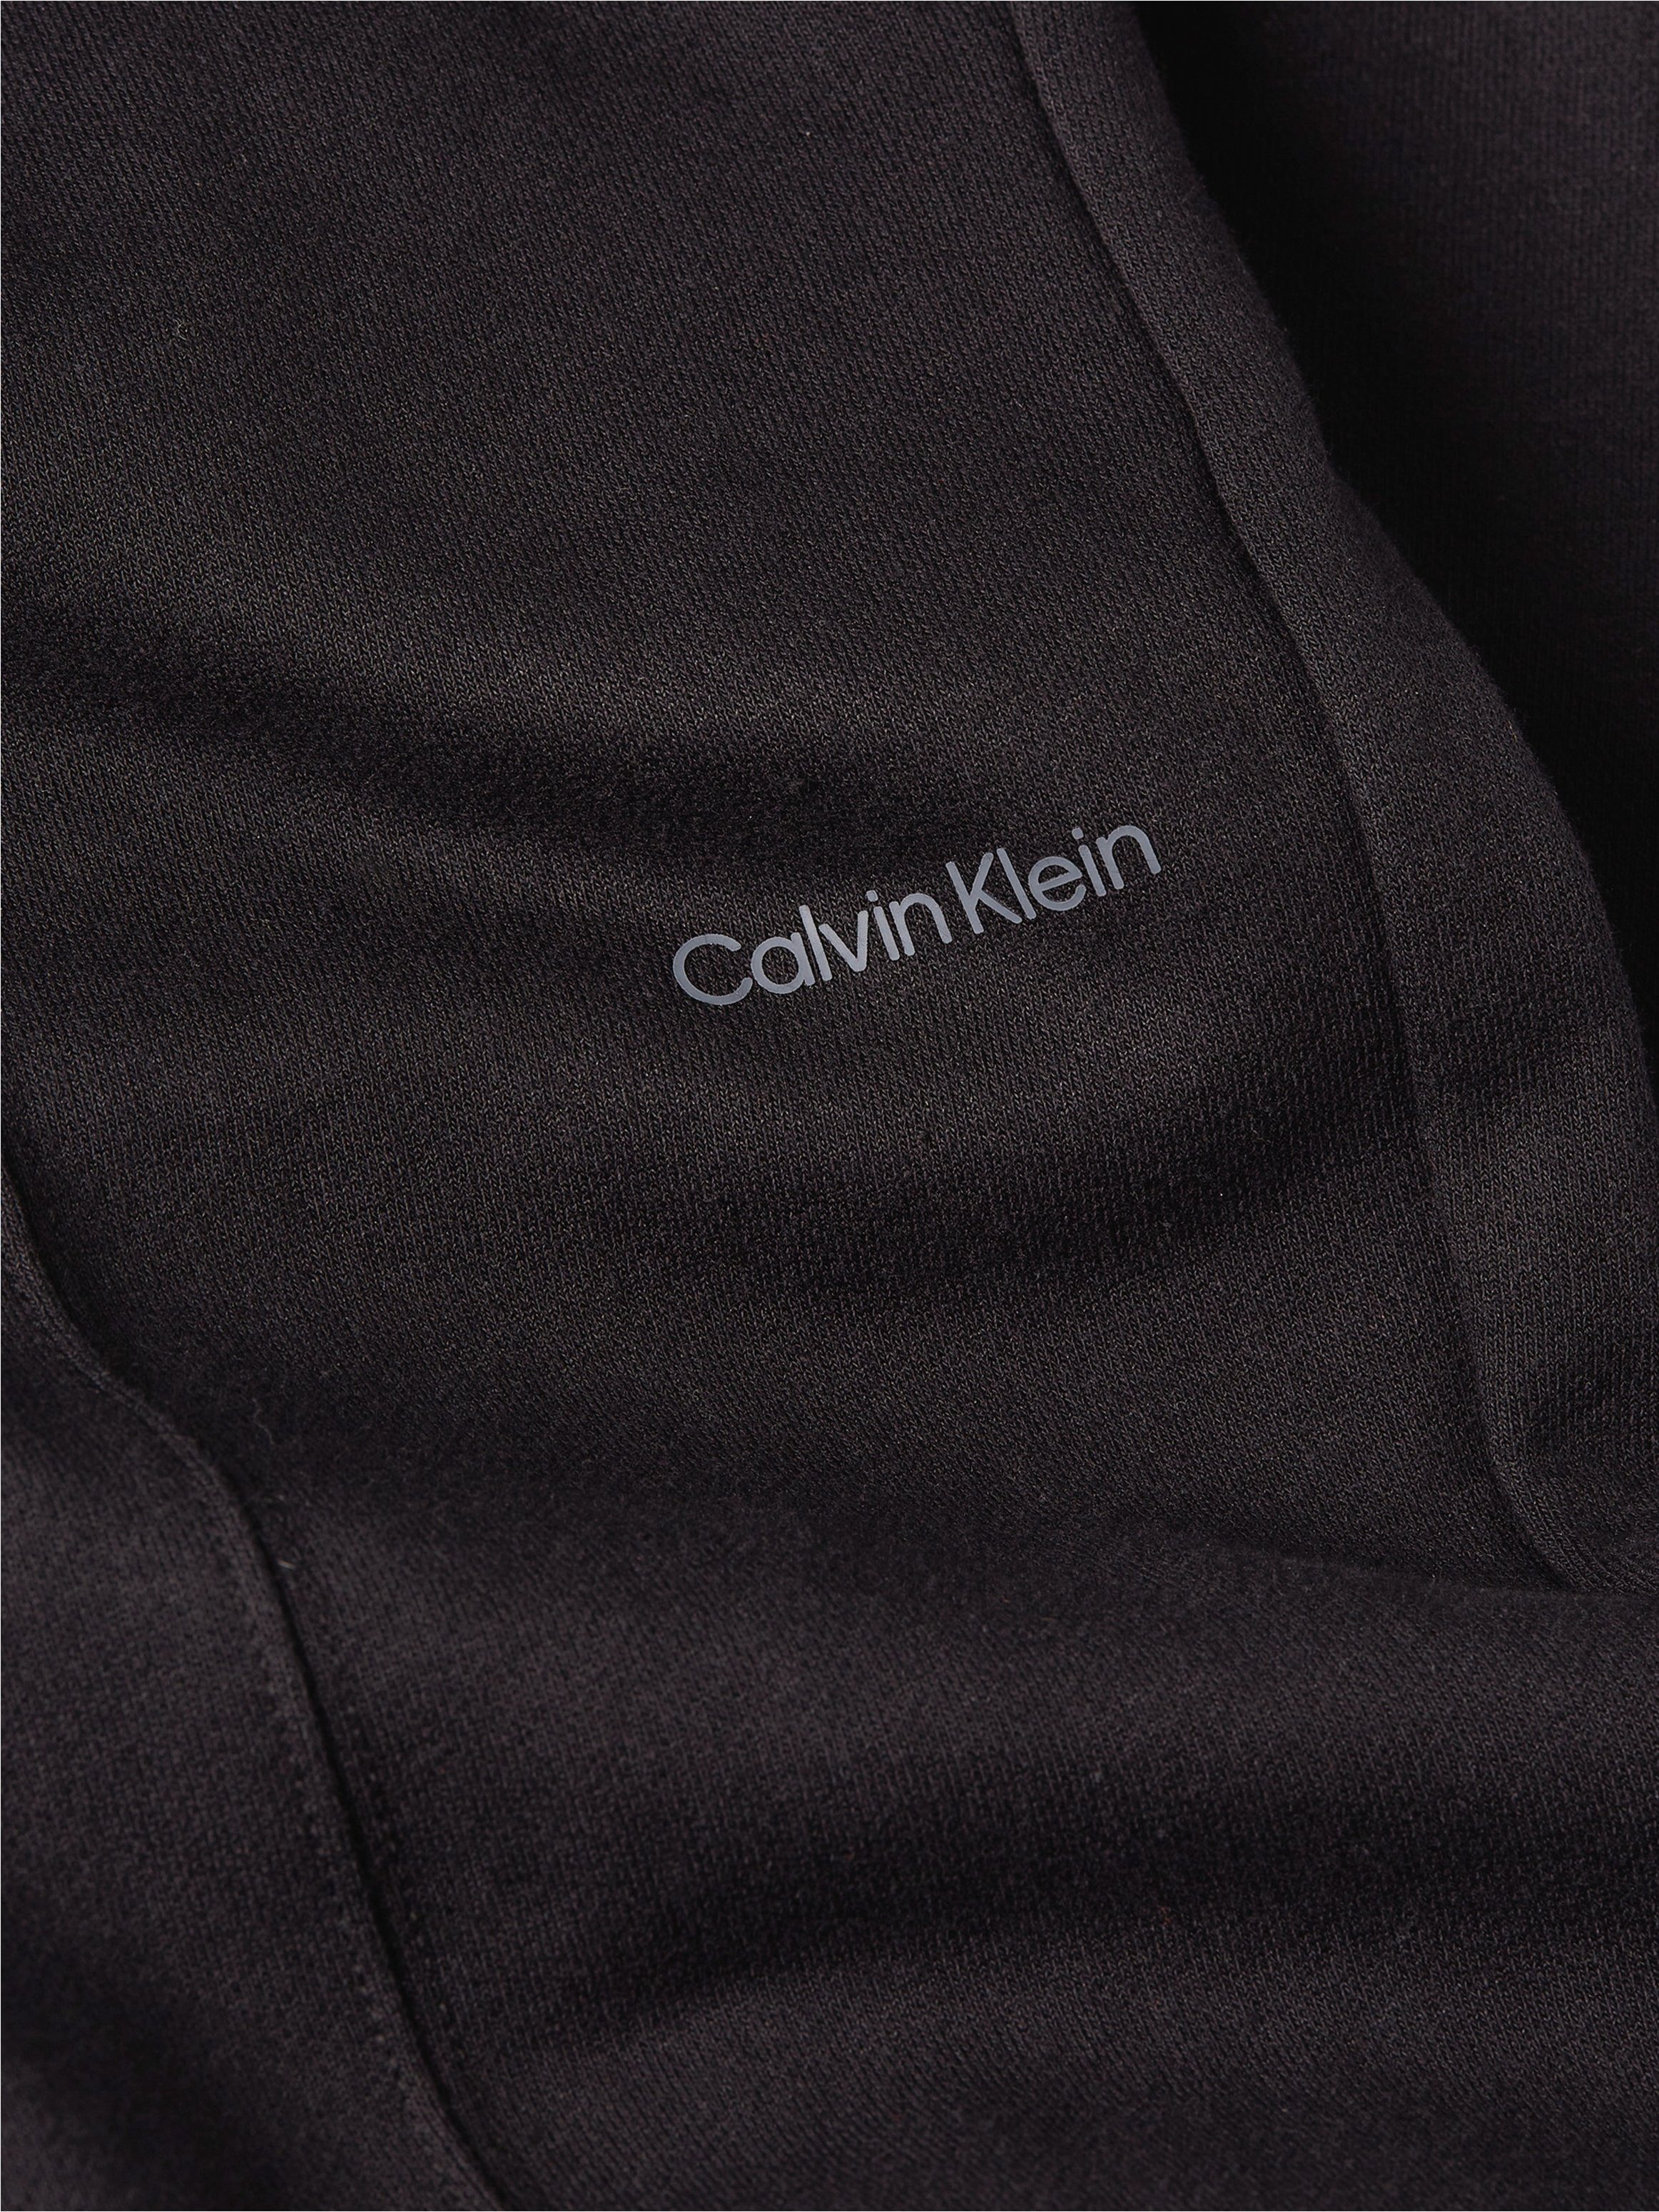 Sweatpants Sport Calvin Klein